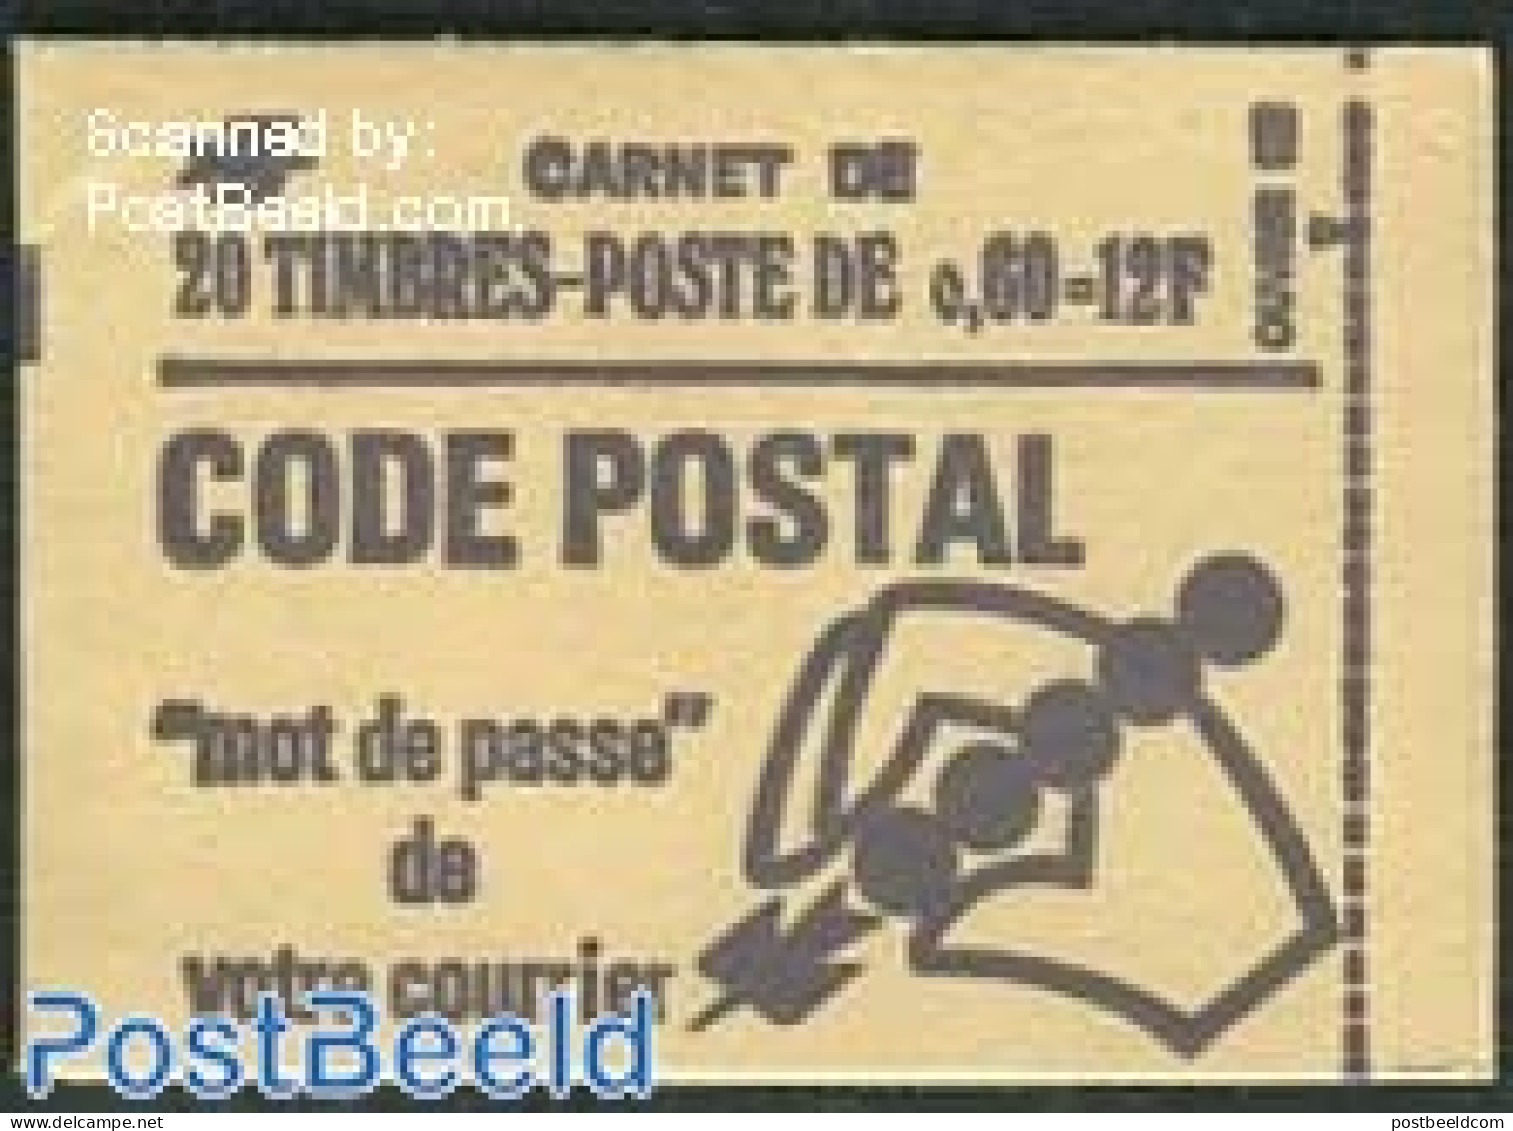 France 1974 Definitives Booklet 20x0.60, Mint NH, Stamp Booklets - Ungebraucht